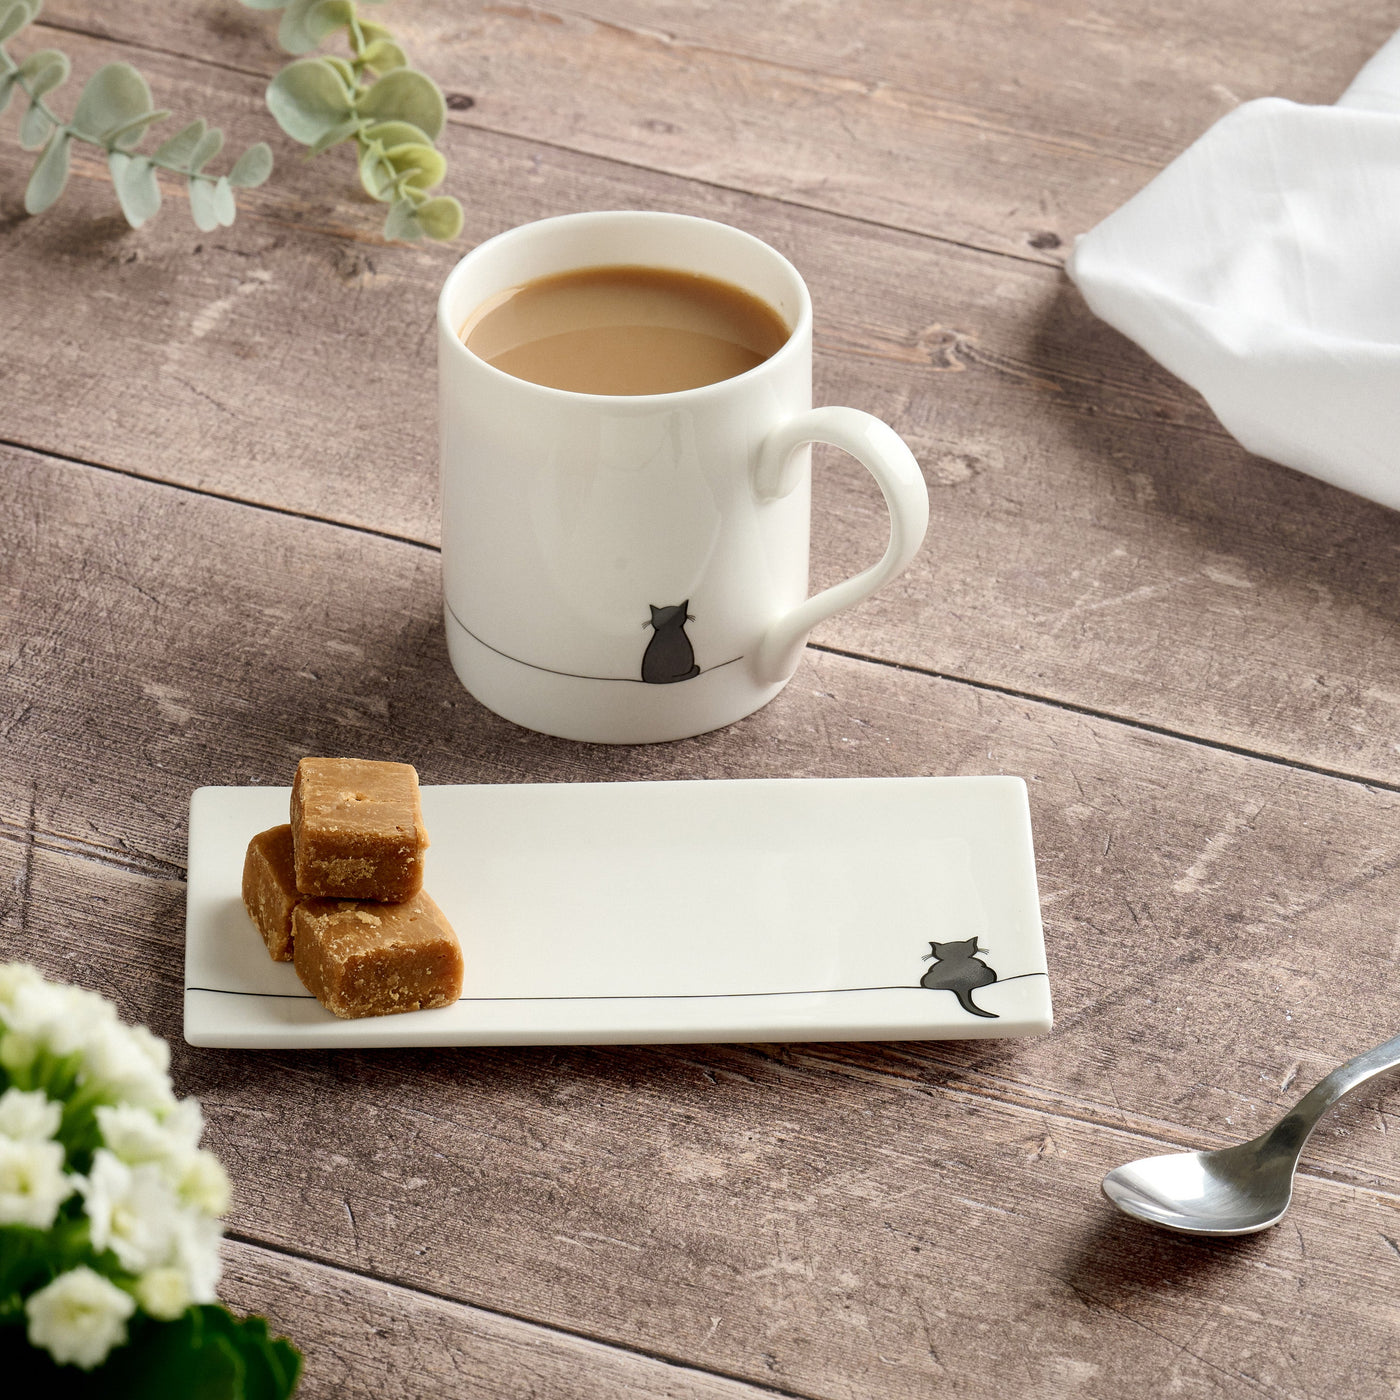 Tea and Fudge with Sitting Cat Mug and Crouching Cat Mini Tray